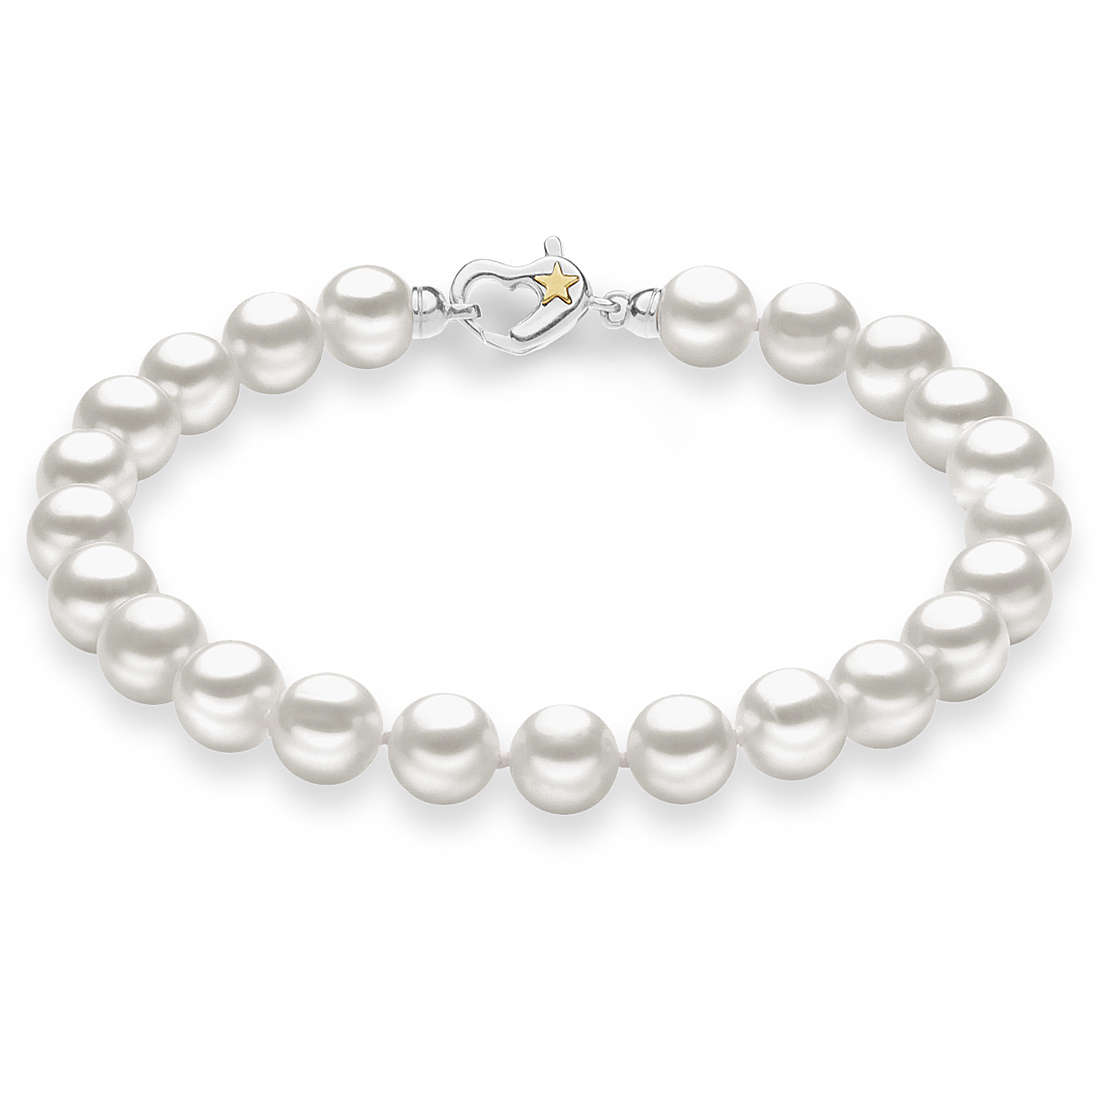 Armband Charms/Beads frau Silber 925 Schmuck Comete Perle Argento BRQ 315